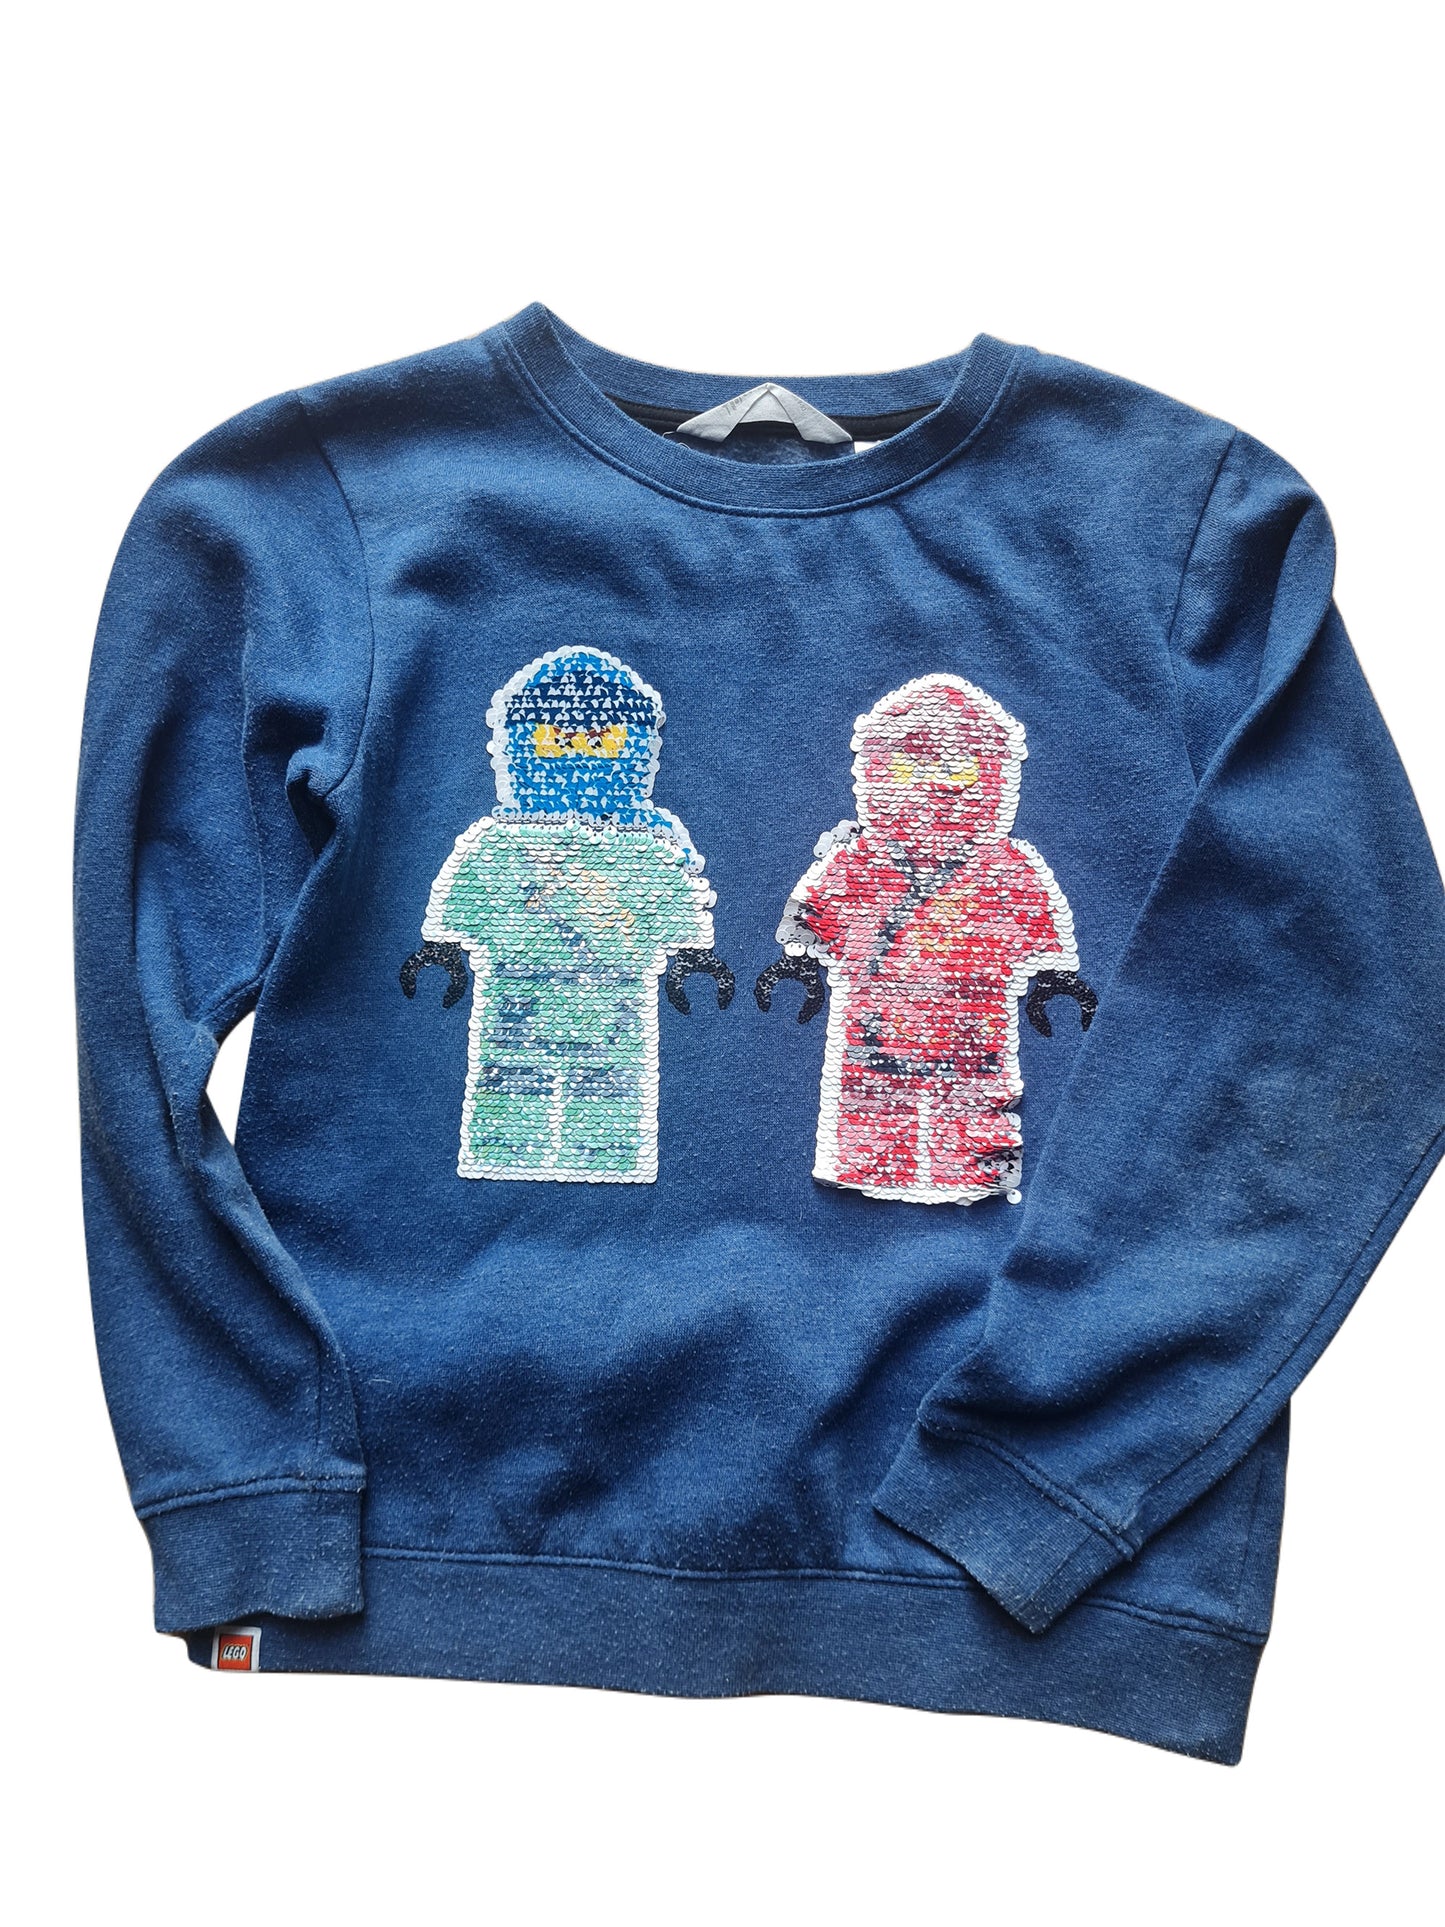 Blue Ninjago Sweater